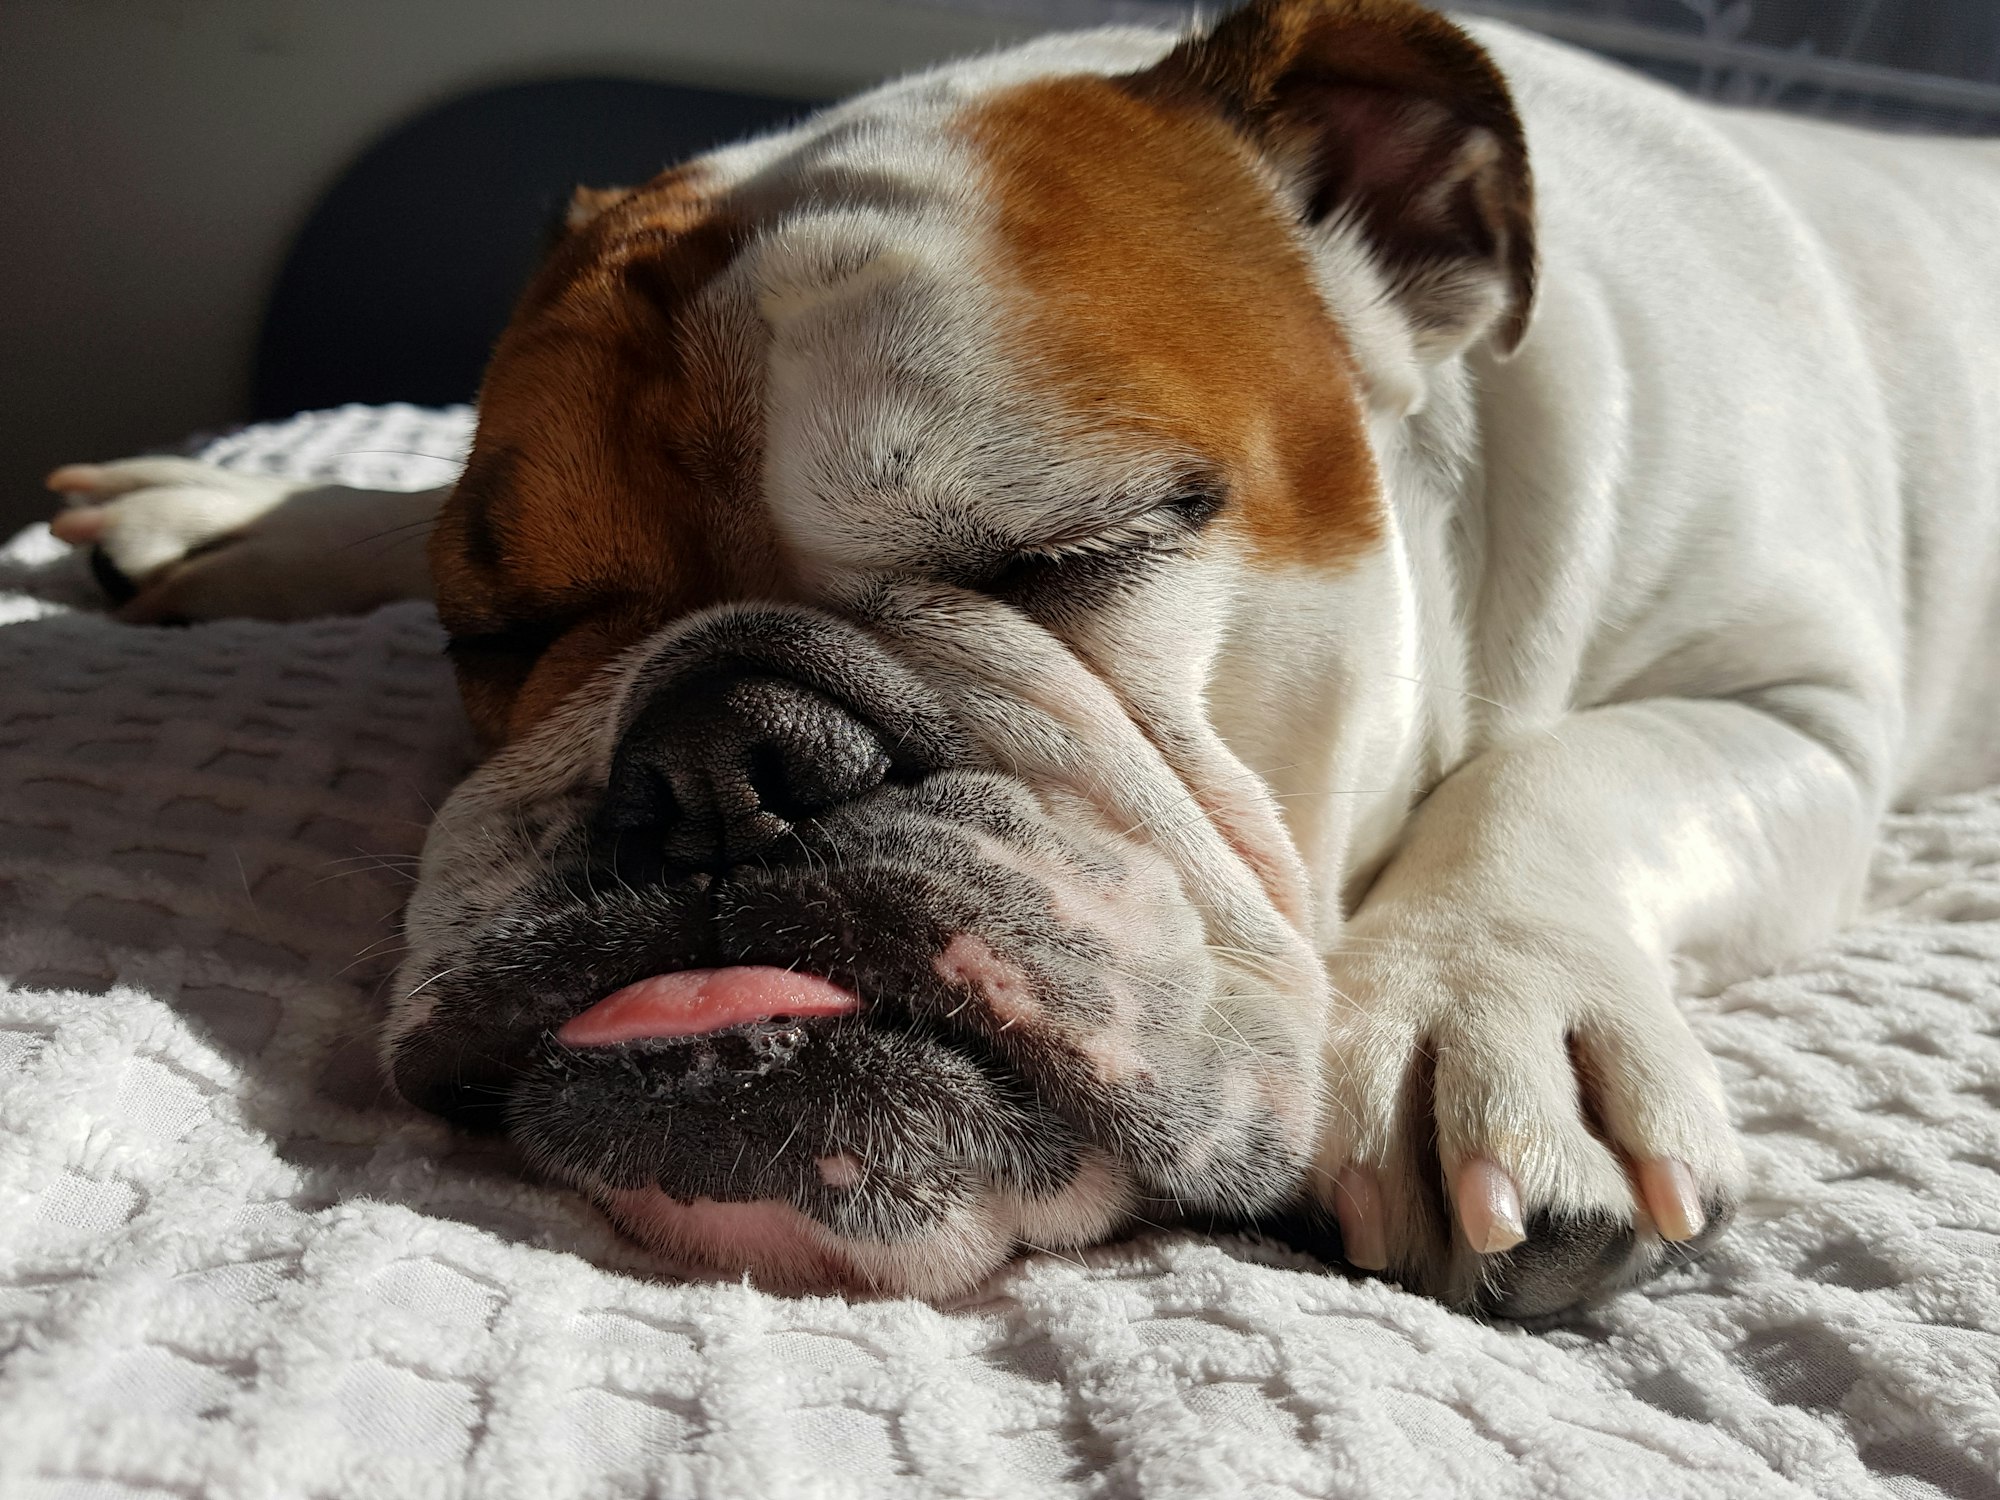 Dog Sleeping Positions Explained